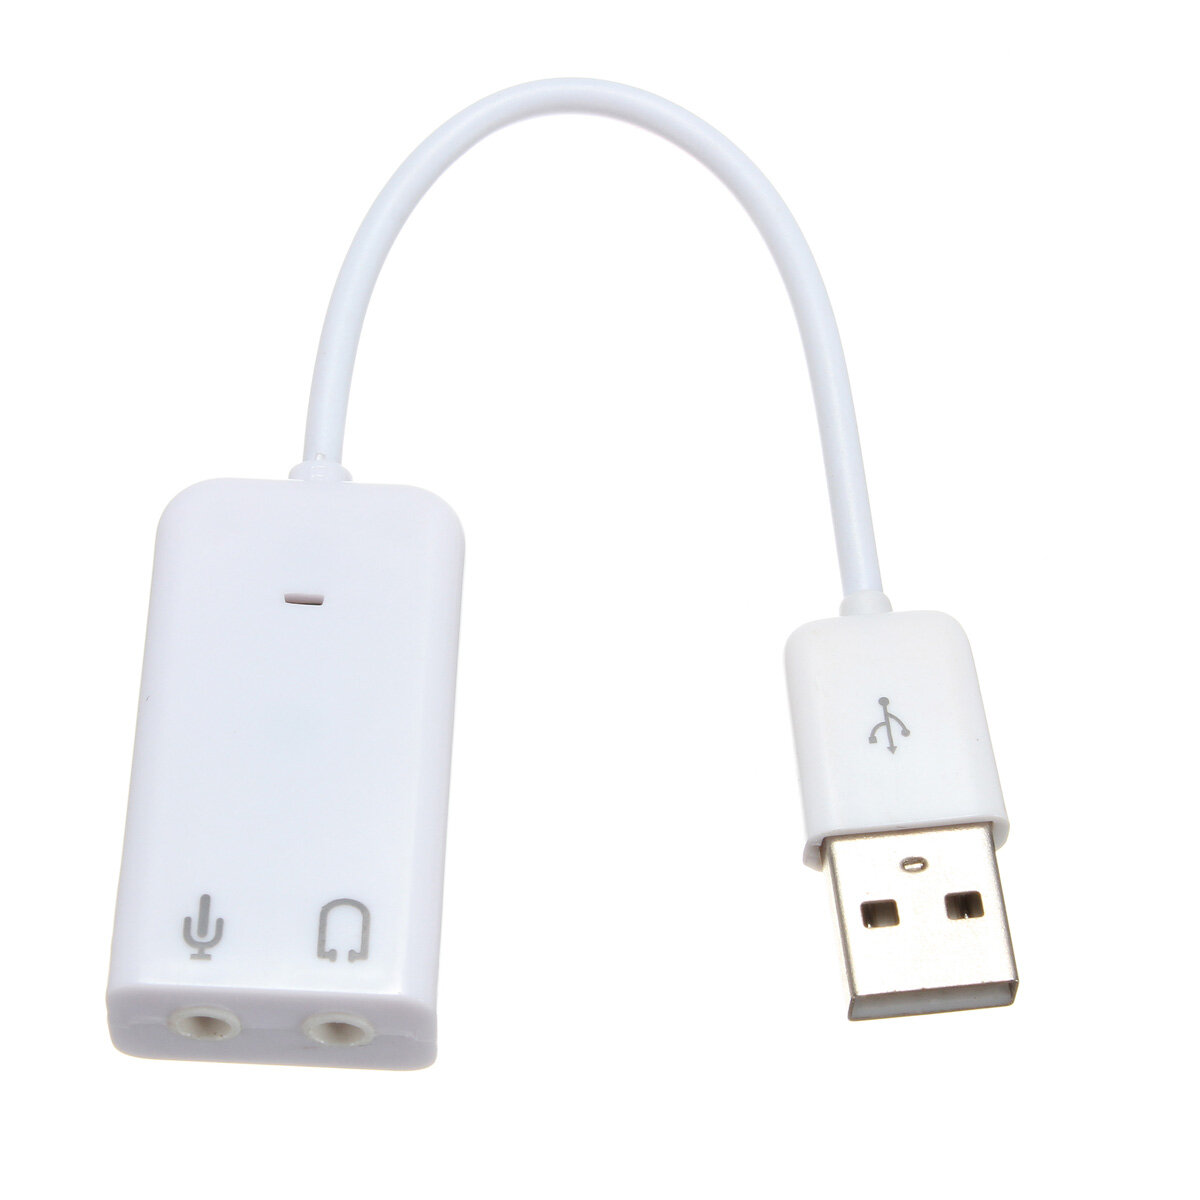 USB 2.0 خارجي الصوت بطاقة 20 سم 7.1 قناة الصوت بطاقة w / 3.5 مللي متر سماعة رأس وميكروفون جاك وحهة المستخدم ميكروفون ستي